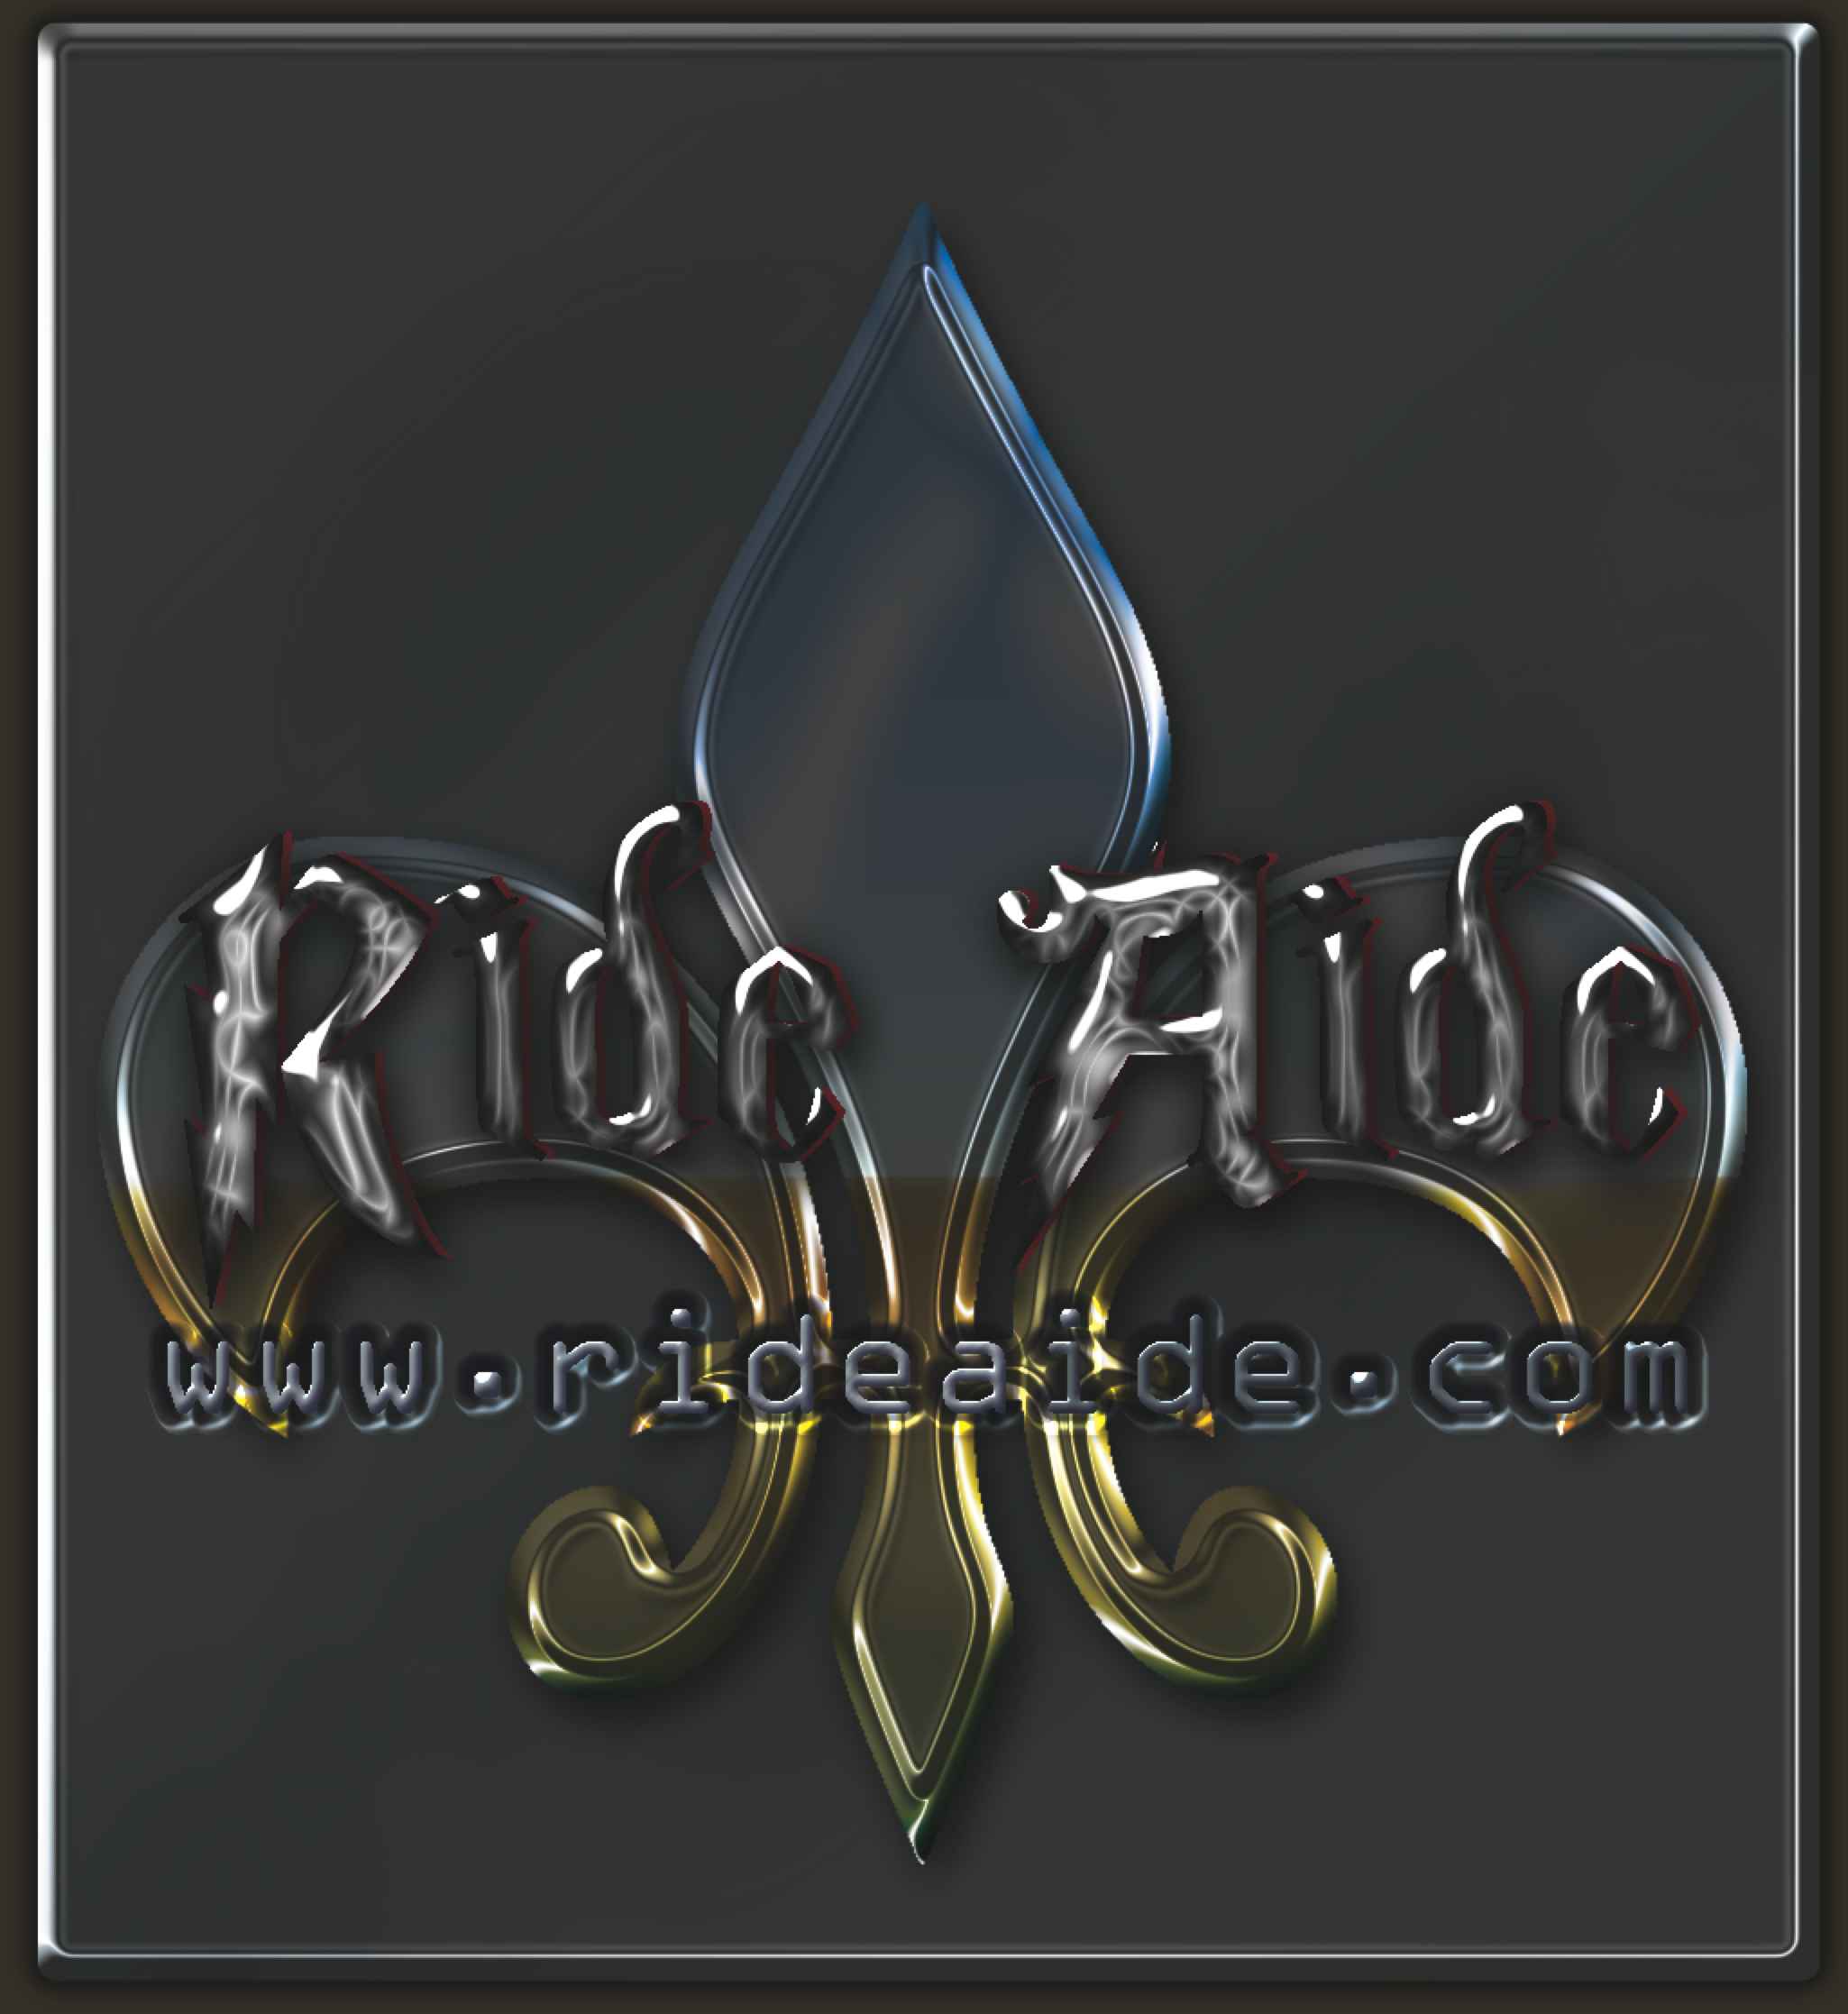 rideaide_logo2.jpg